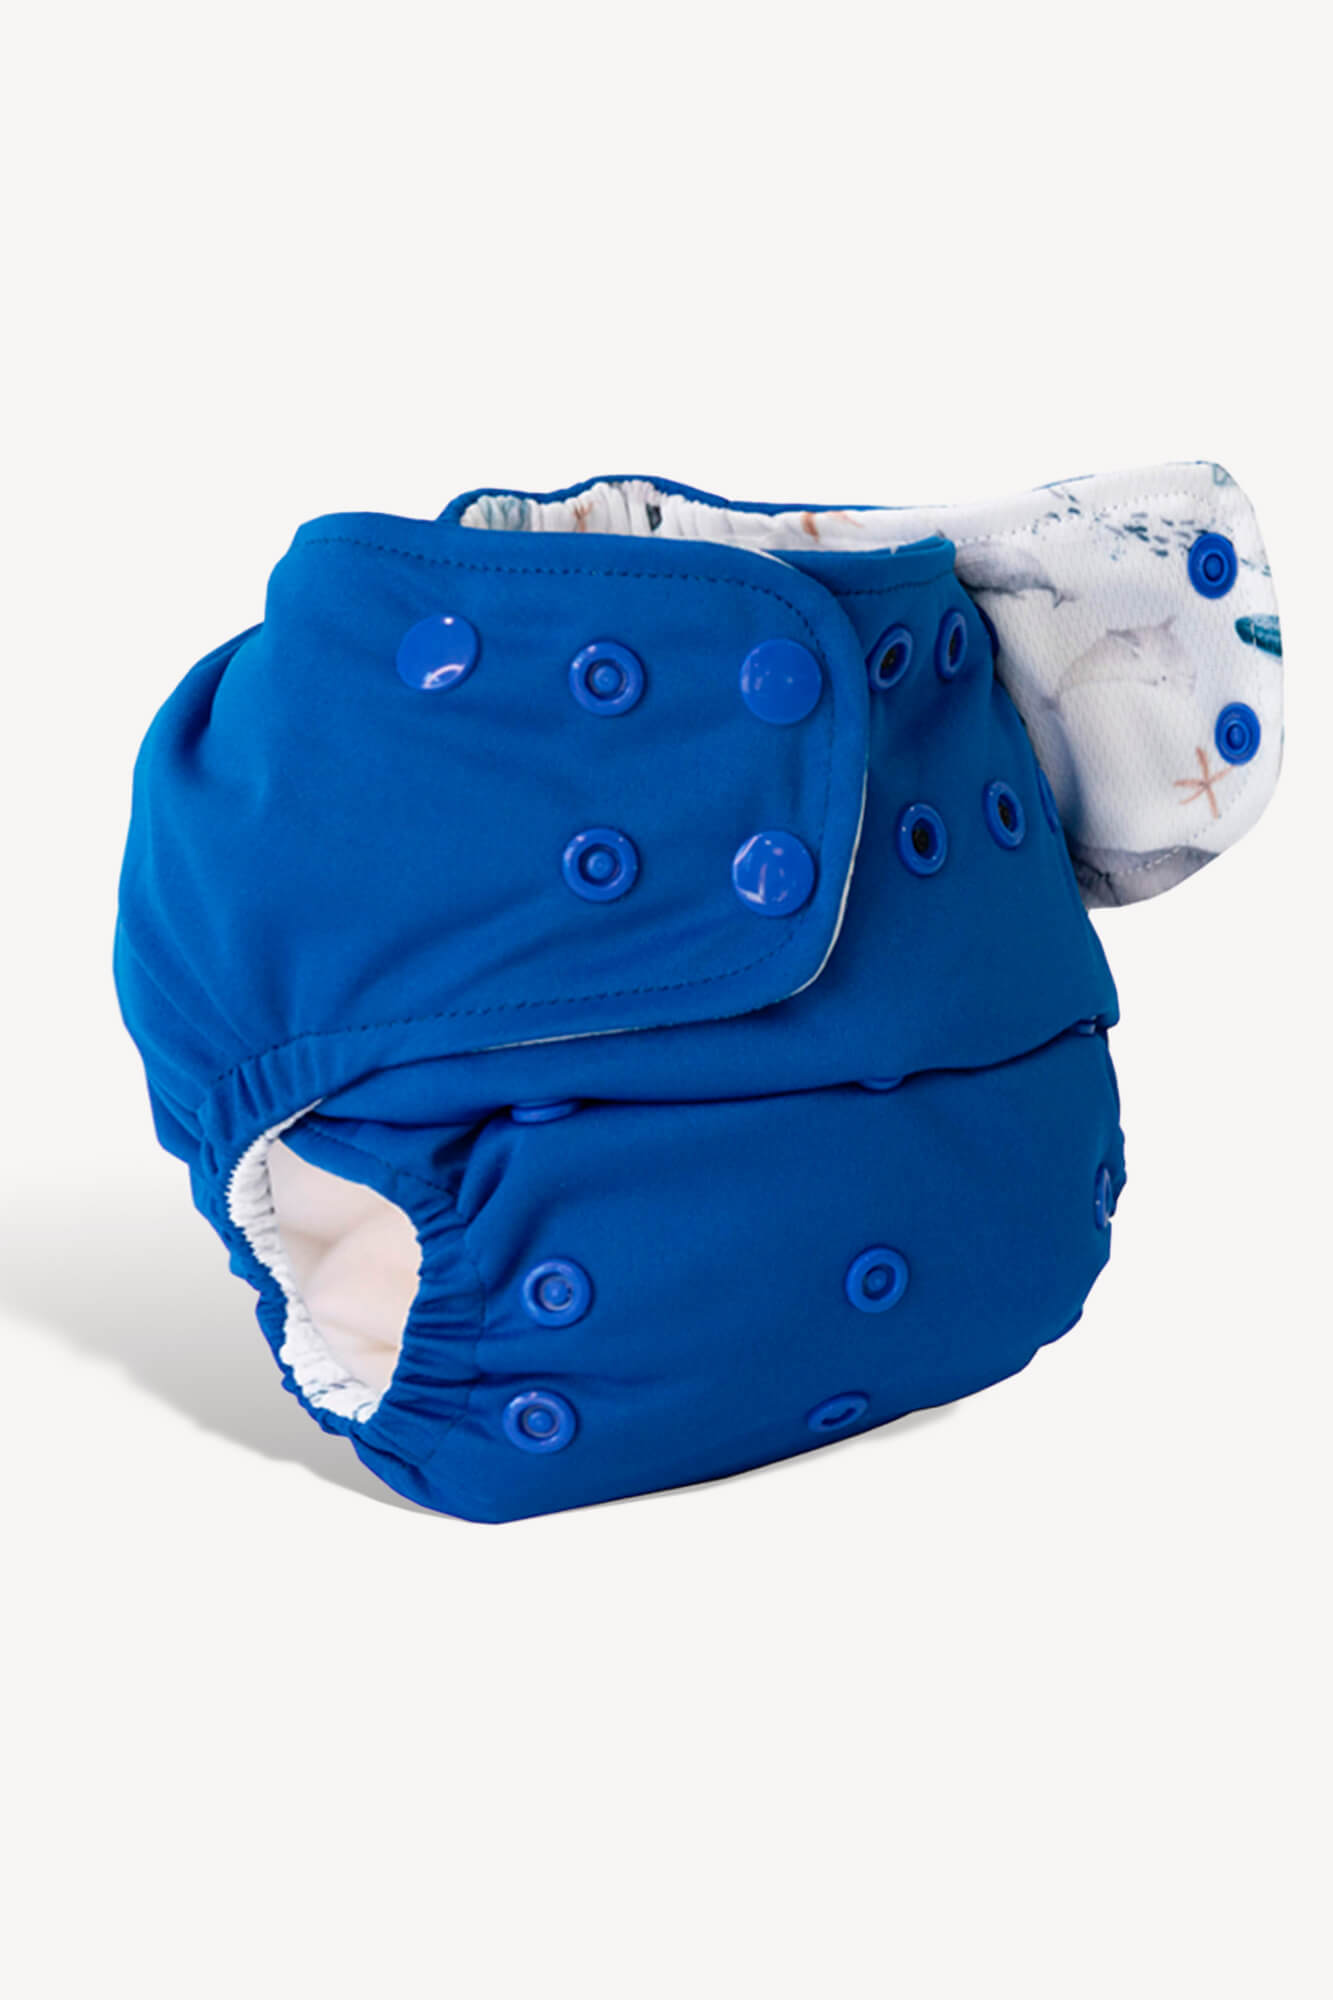 All-In-One Cloth Diaper - Peekaboo Blue Whale